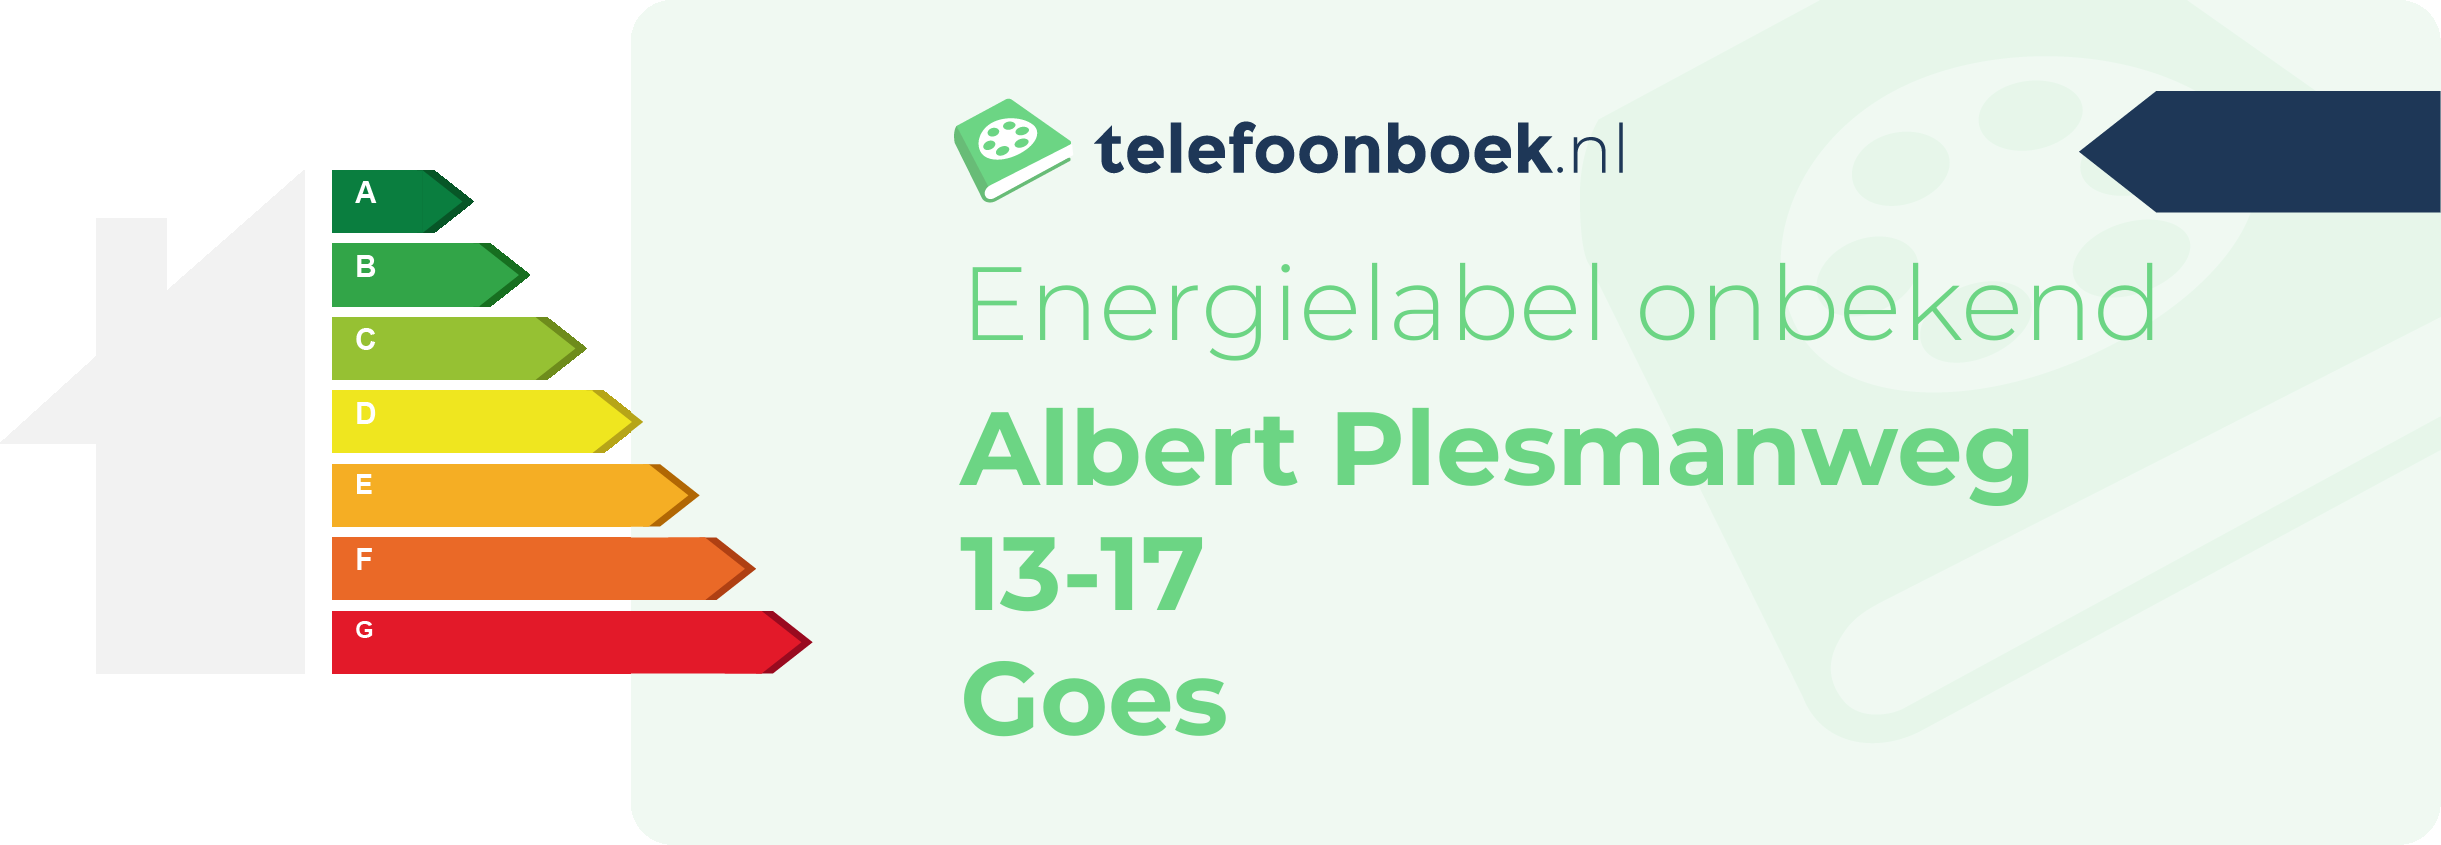 Energielabel Albert Plesmanweg 13-17 Goes